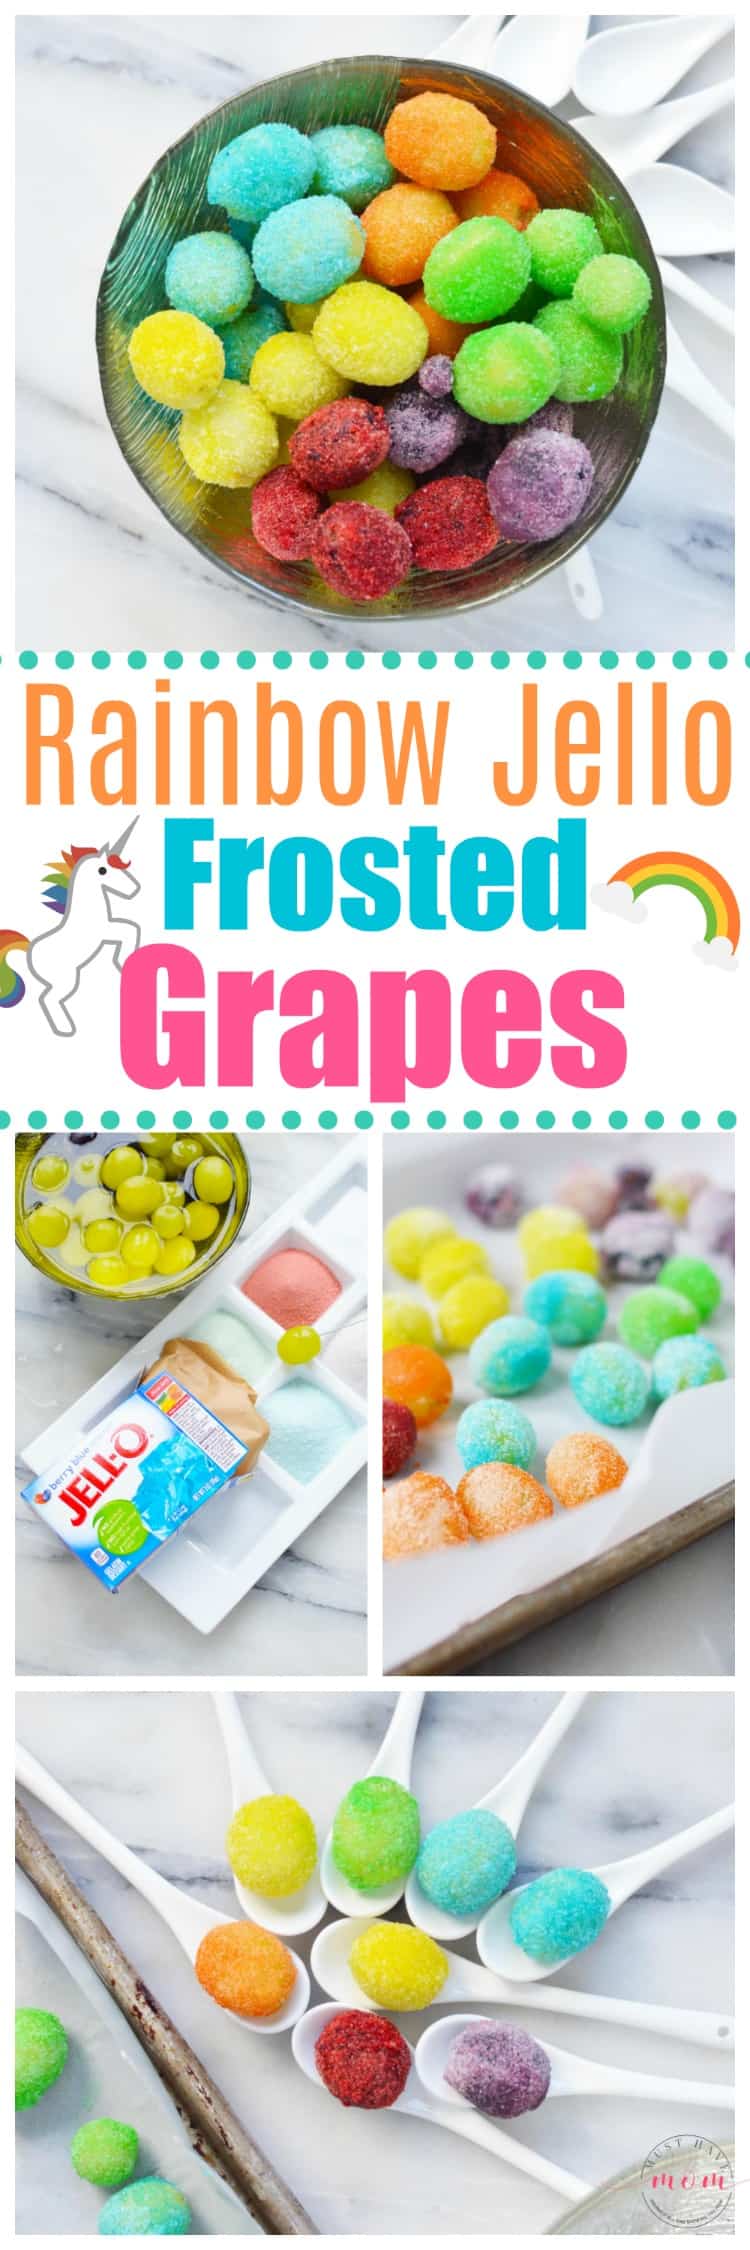 Rainbow Jello frosted grapes recipe! Rainbow frosted grapes are fun rainbow food that are also a gluten free treat!